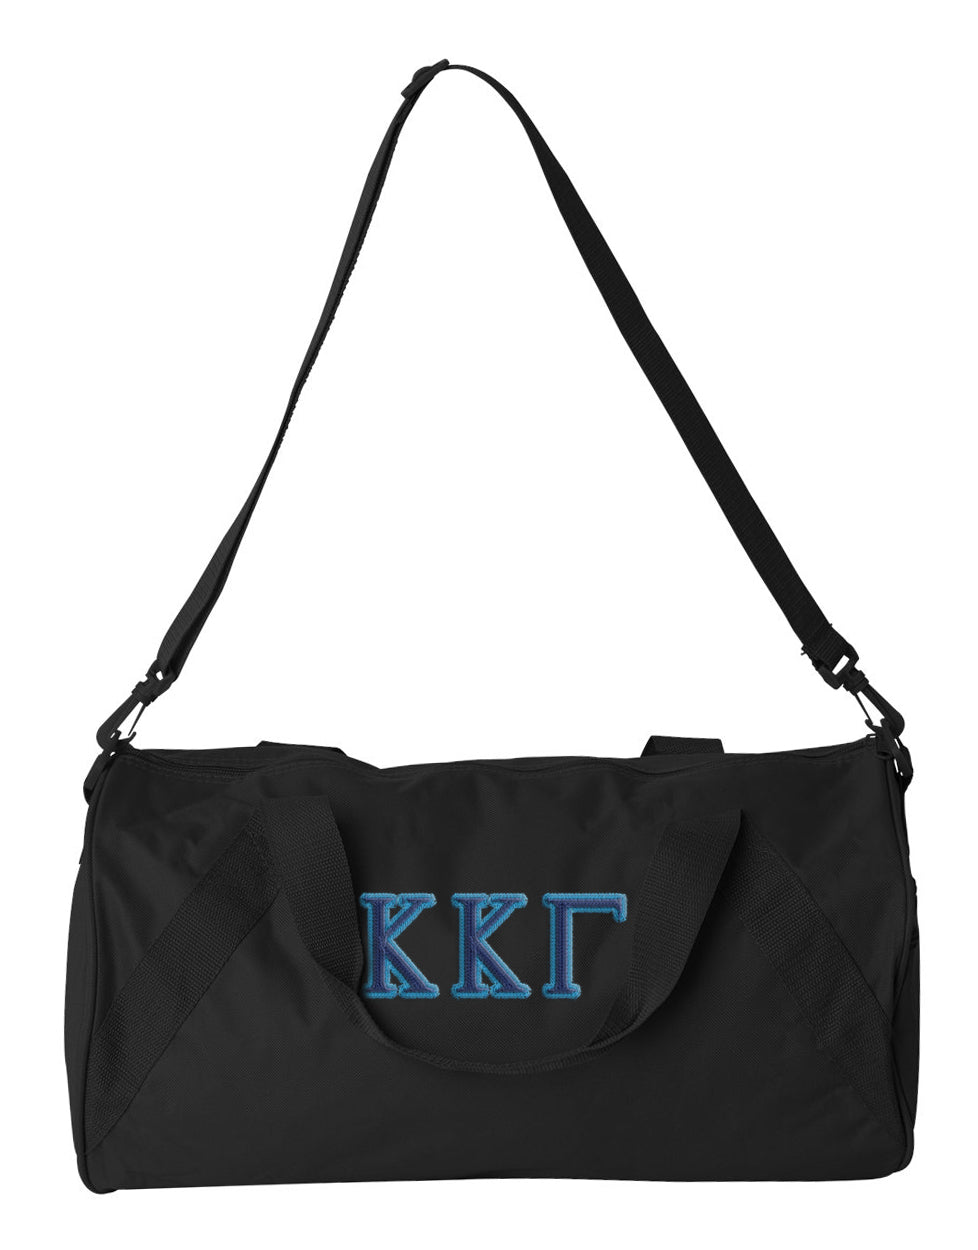 Kappa Kappa Gamma Embroidered Duffel Bag